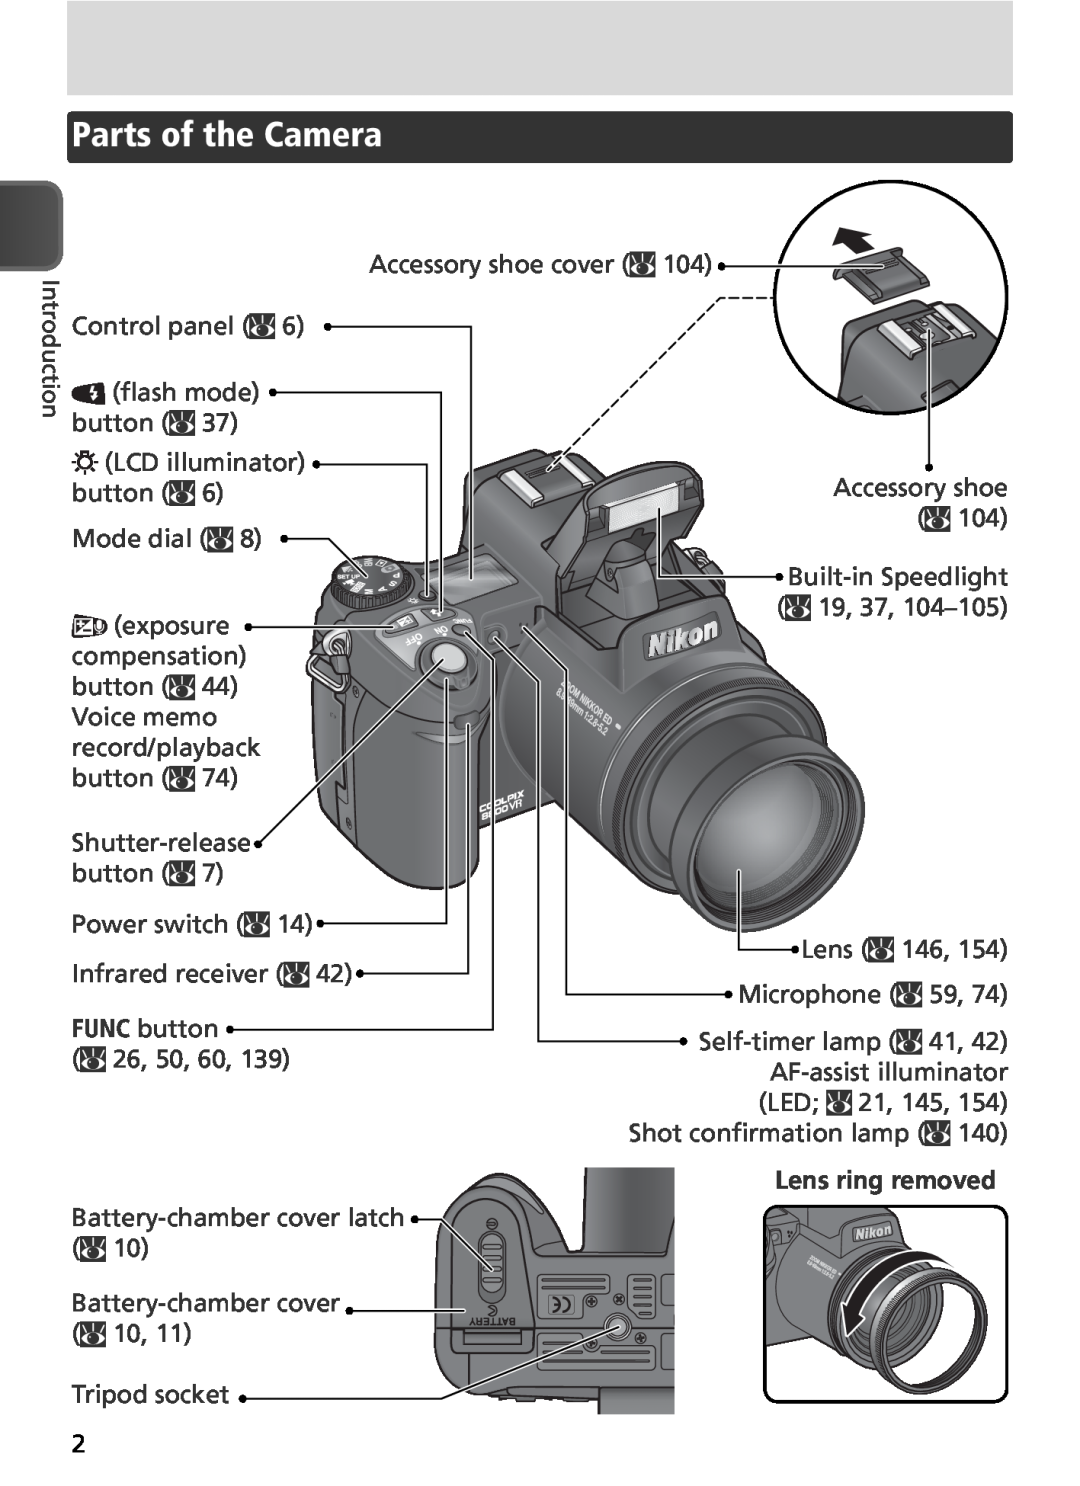 Nikon COOLPIX8800 manual Parts of the Camera, Lens ring removed 